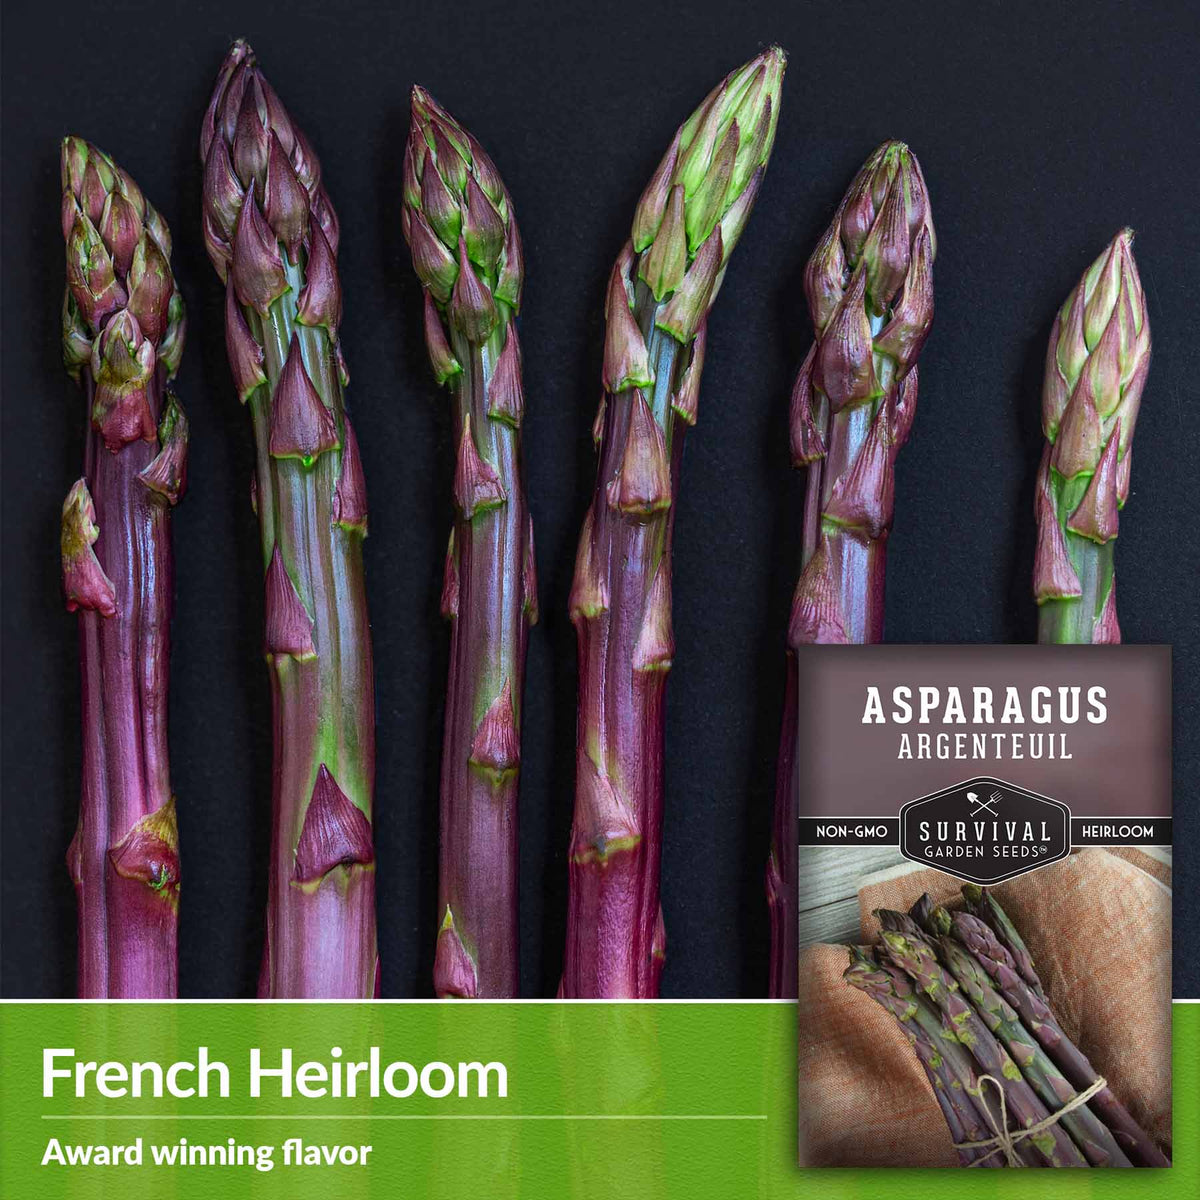 French Heirloom, Award winning flavor